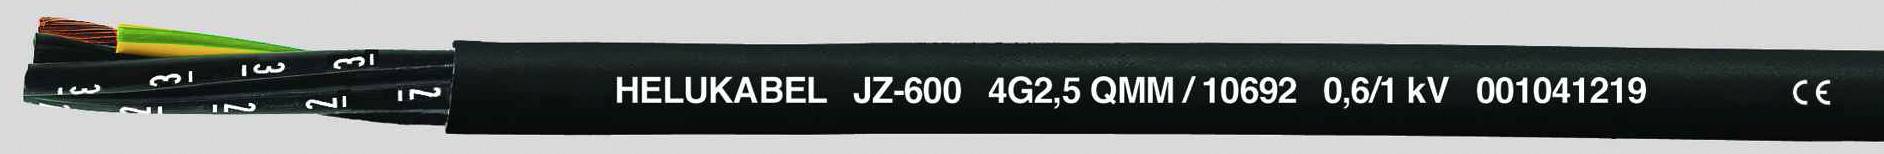 HELUKABEL JZ-600 Steuerleitung 3 G 1.50 mm² Schwarz 10657 100 m